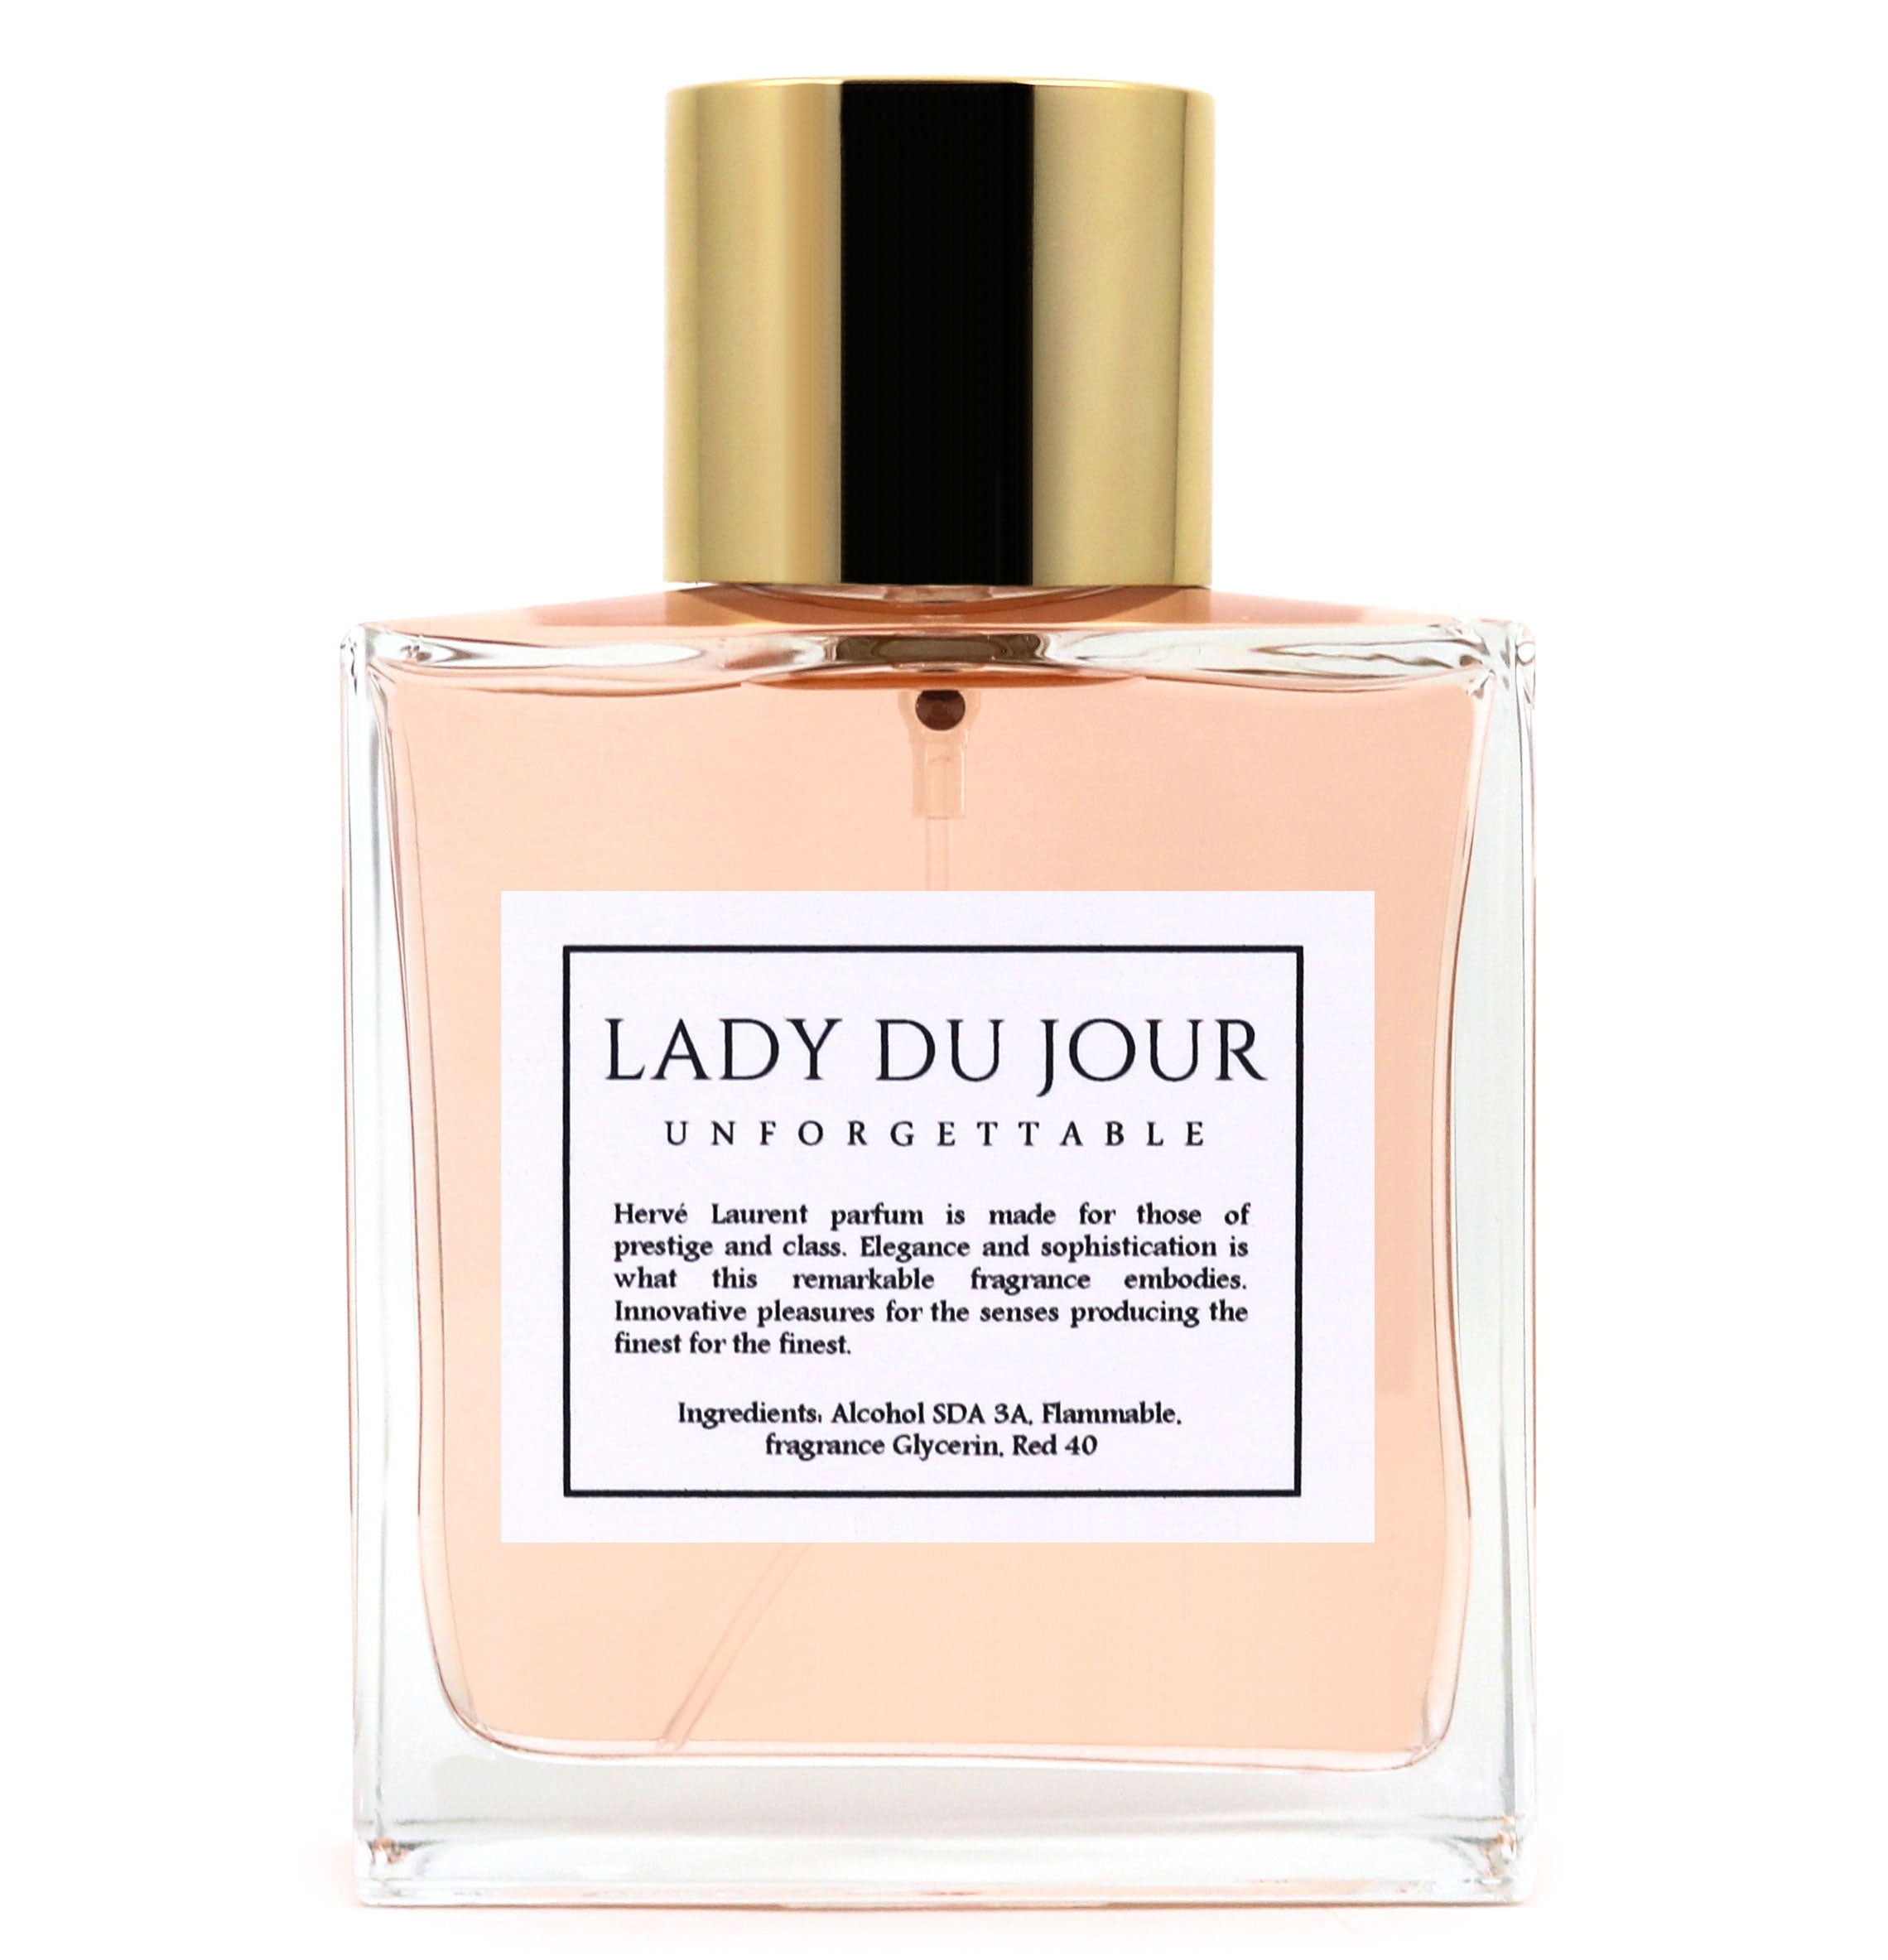 Herve Laurent, Perfume, Parfum, High End Luxury, Designer Fragrance, Fashion Fragrance